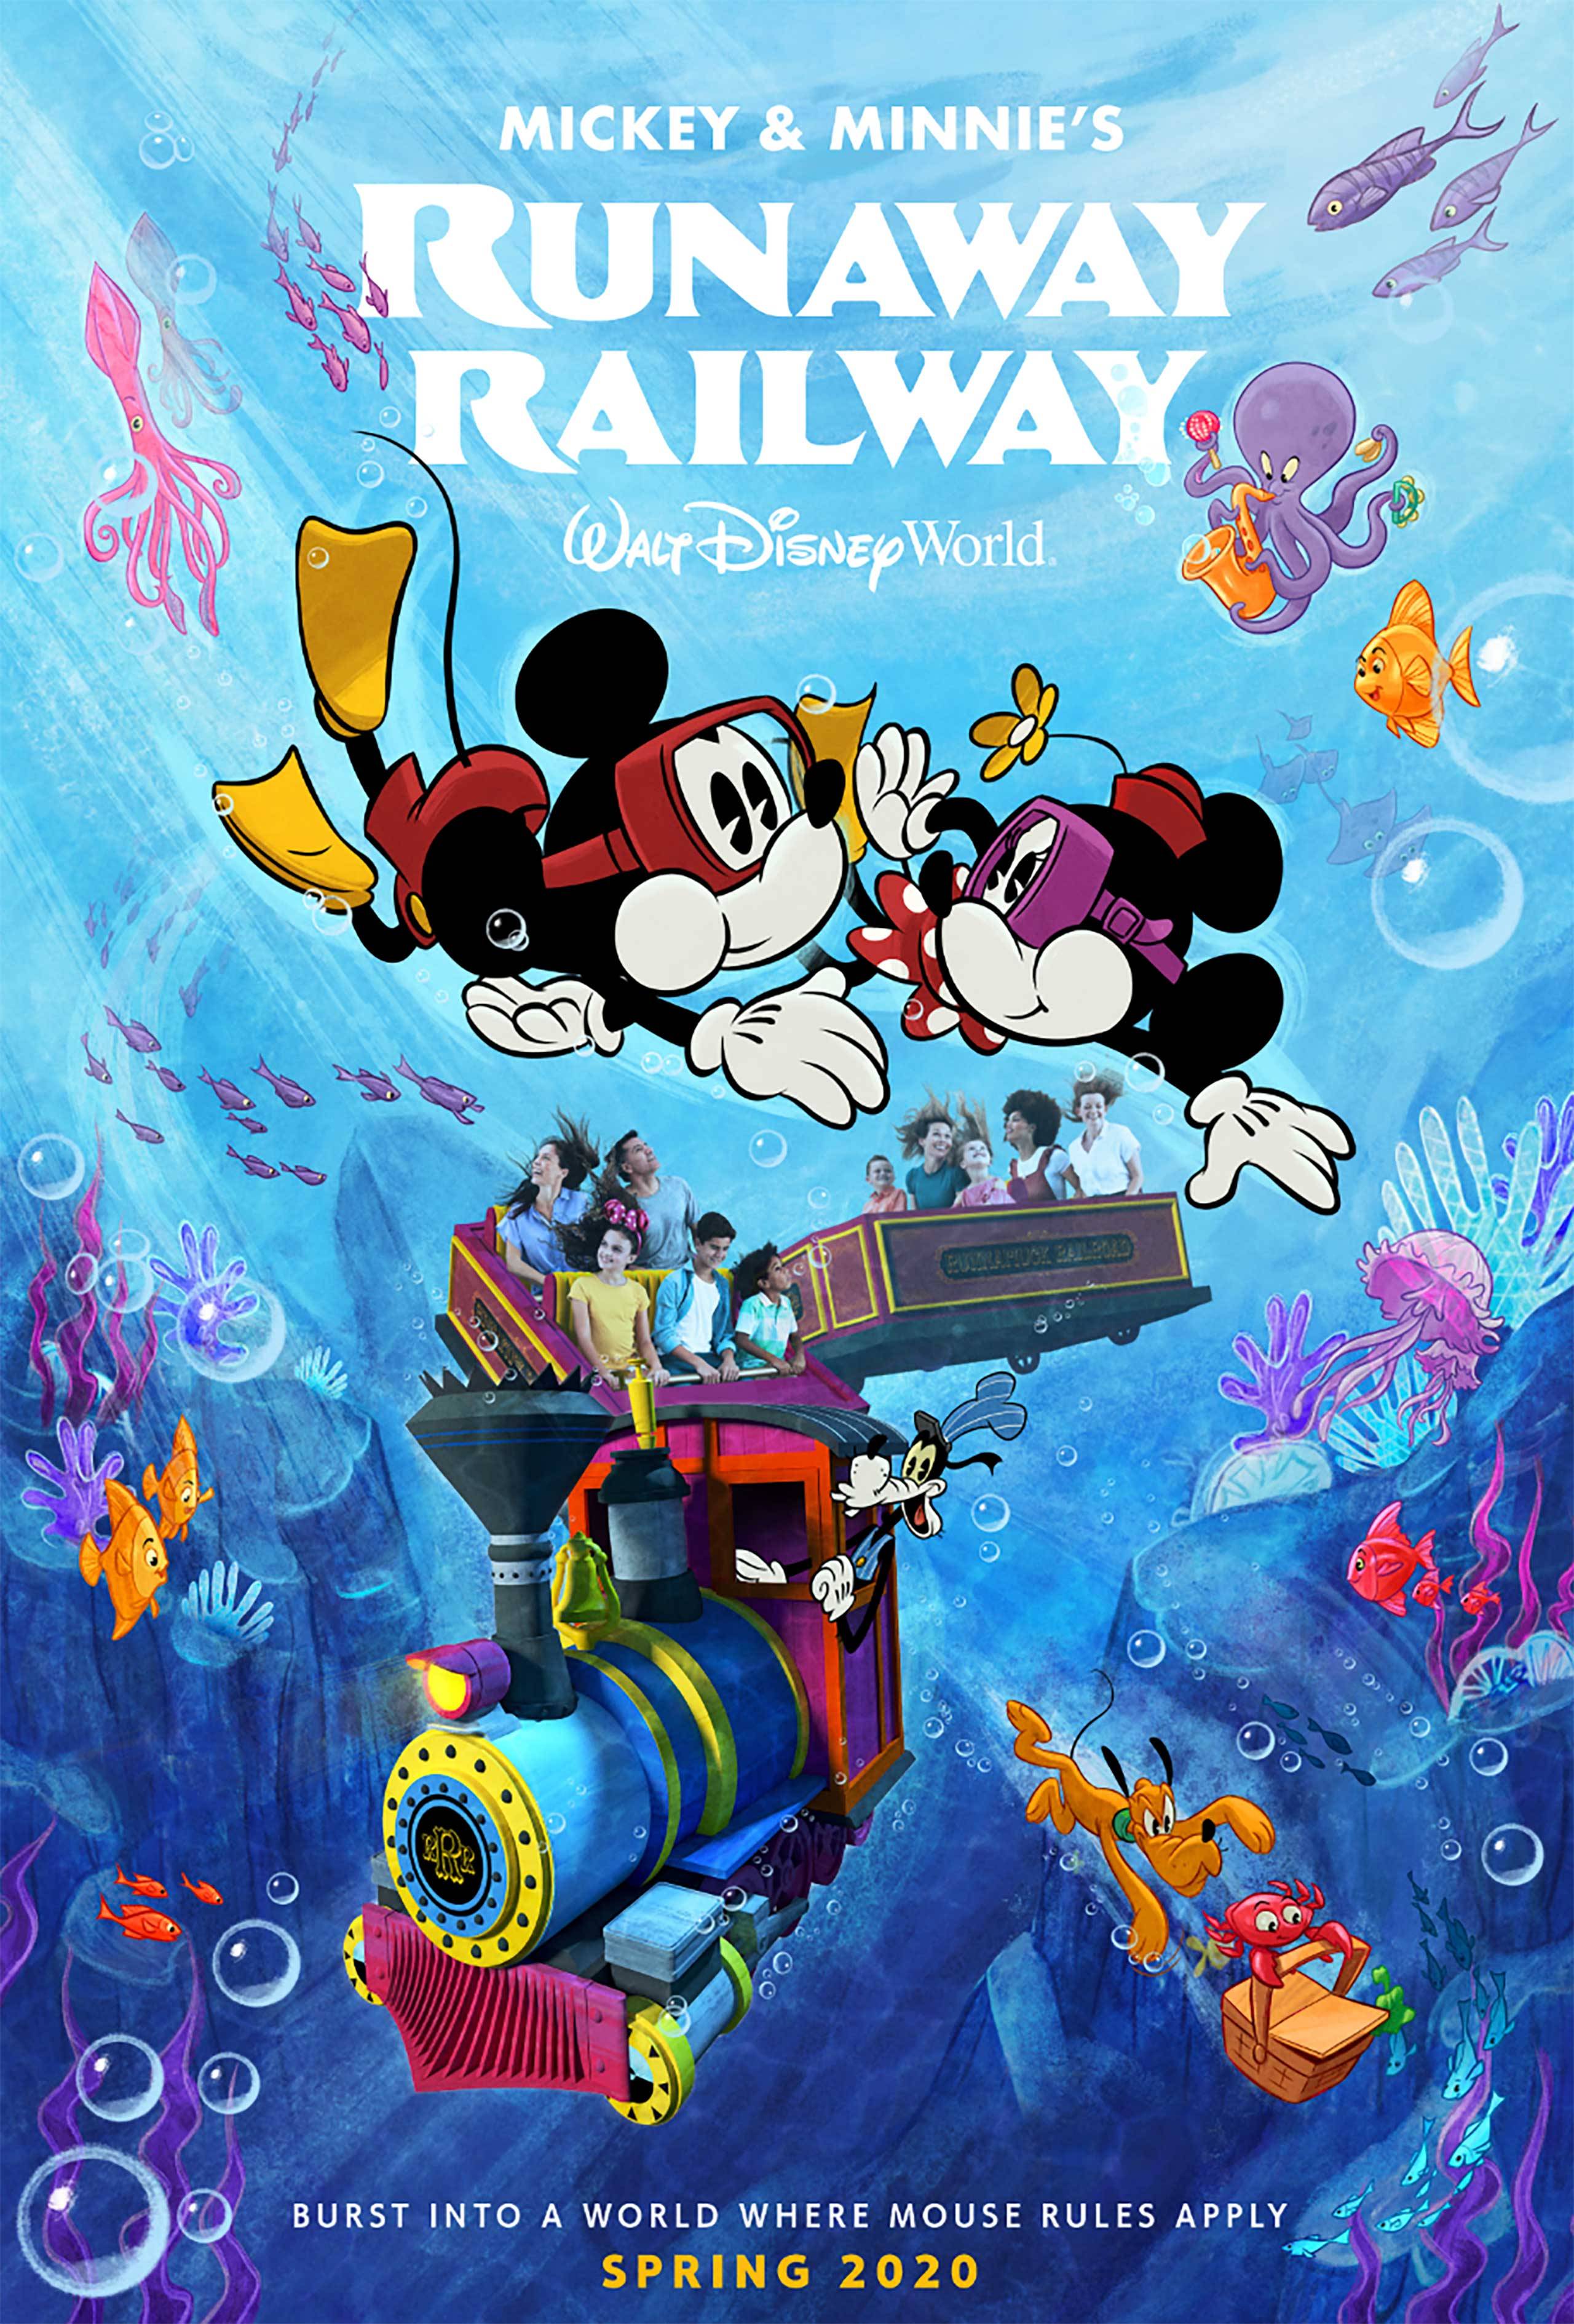 Mickey and Minnie’s Runaway Railway opening date set